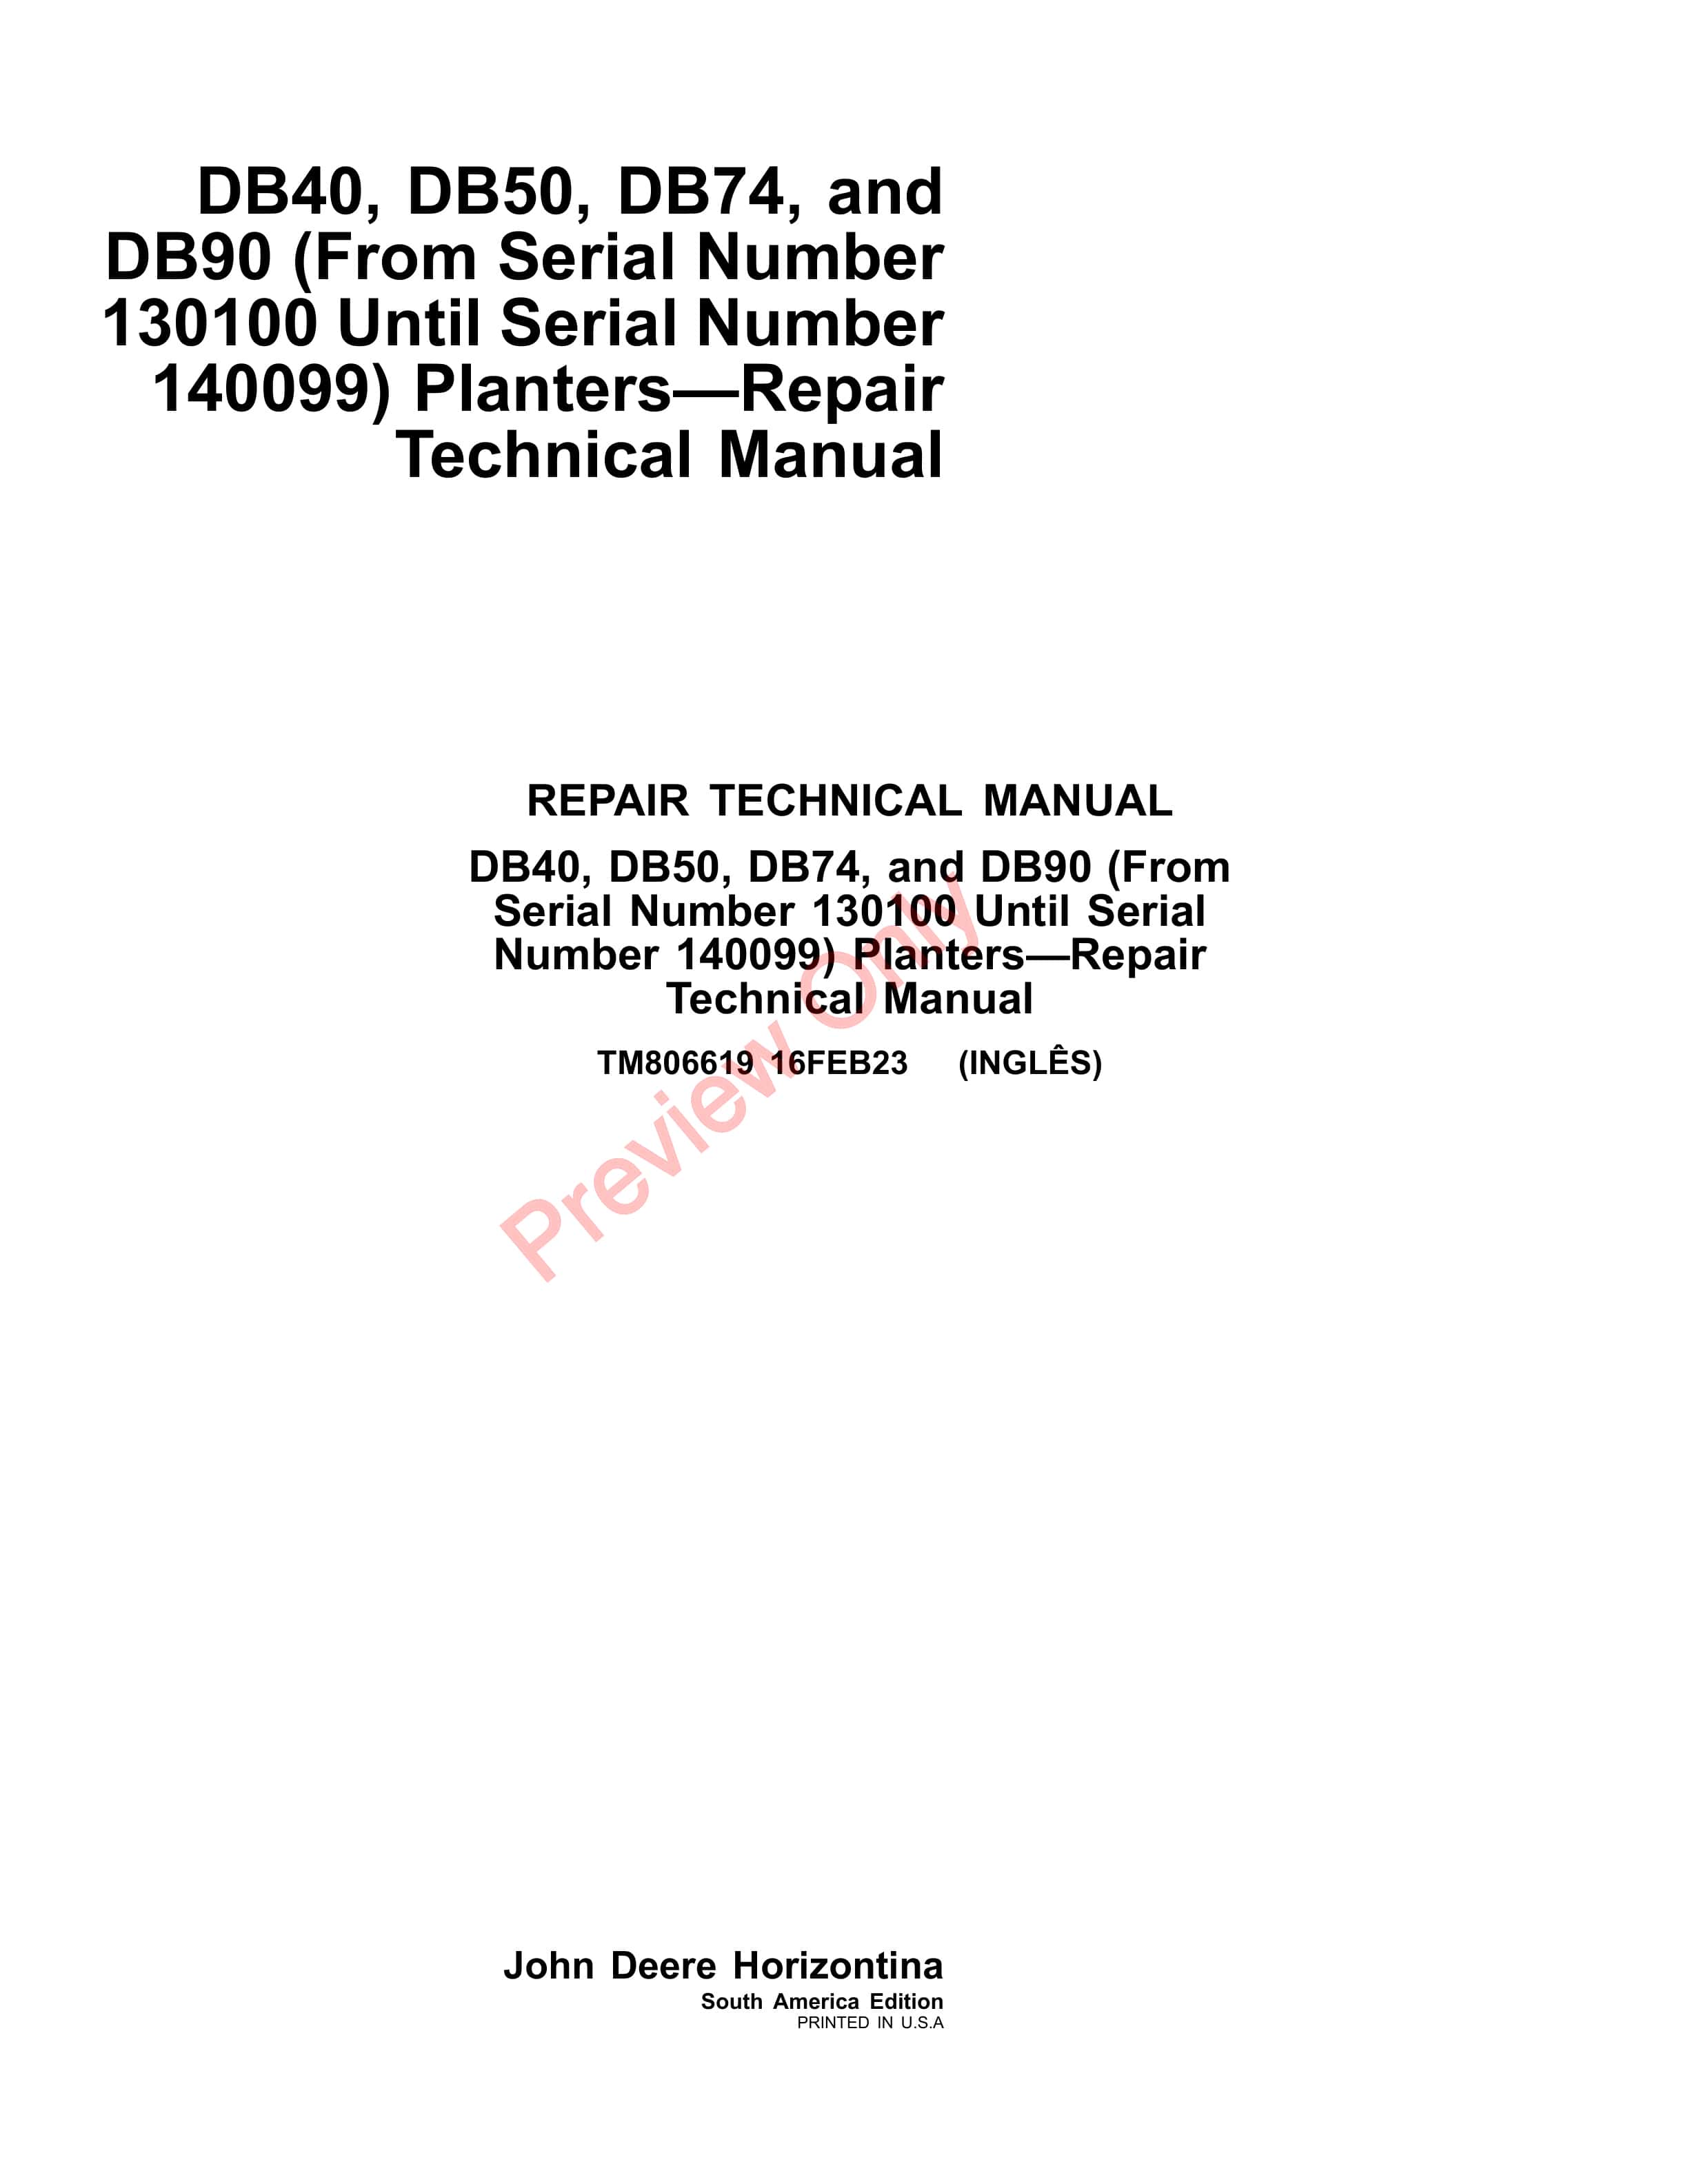 John Deere DB40 DB50 DB74 DB90 Planter 130100 140099 Repair Technical Manual TM806619 16FEB23 1